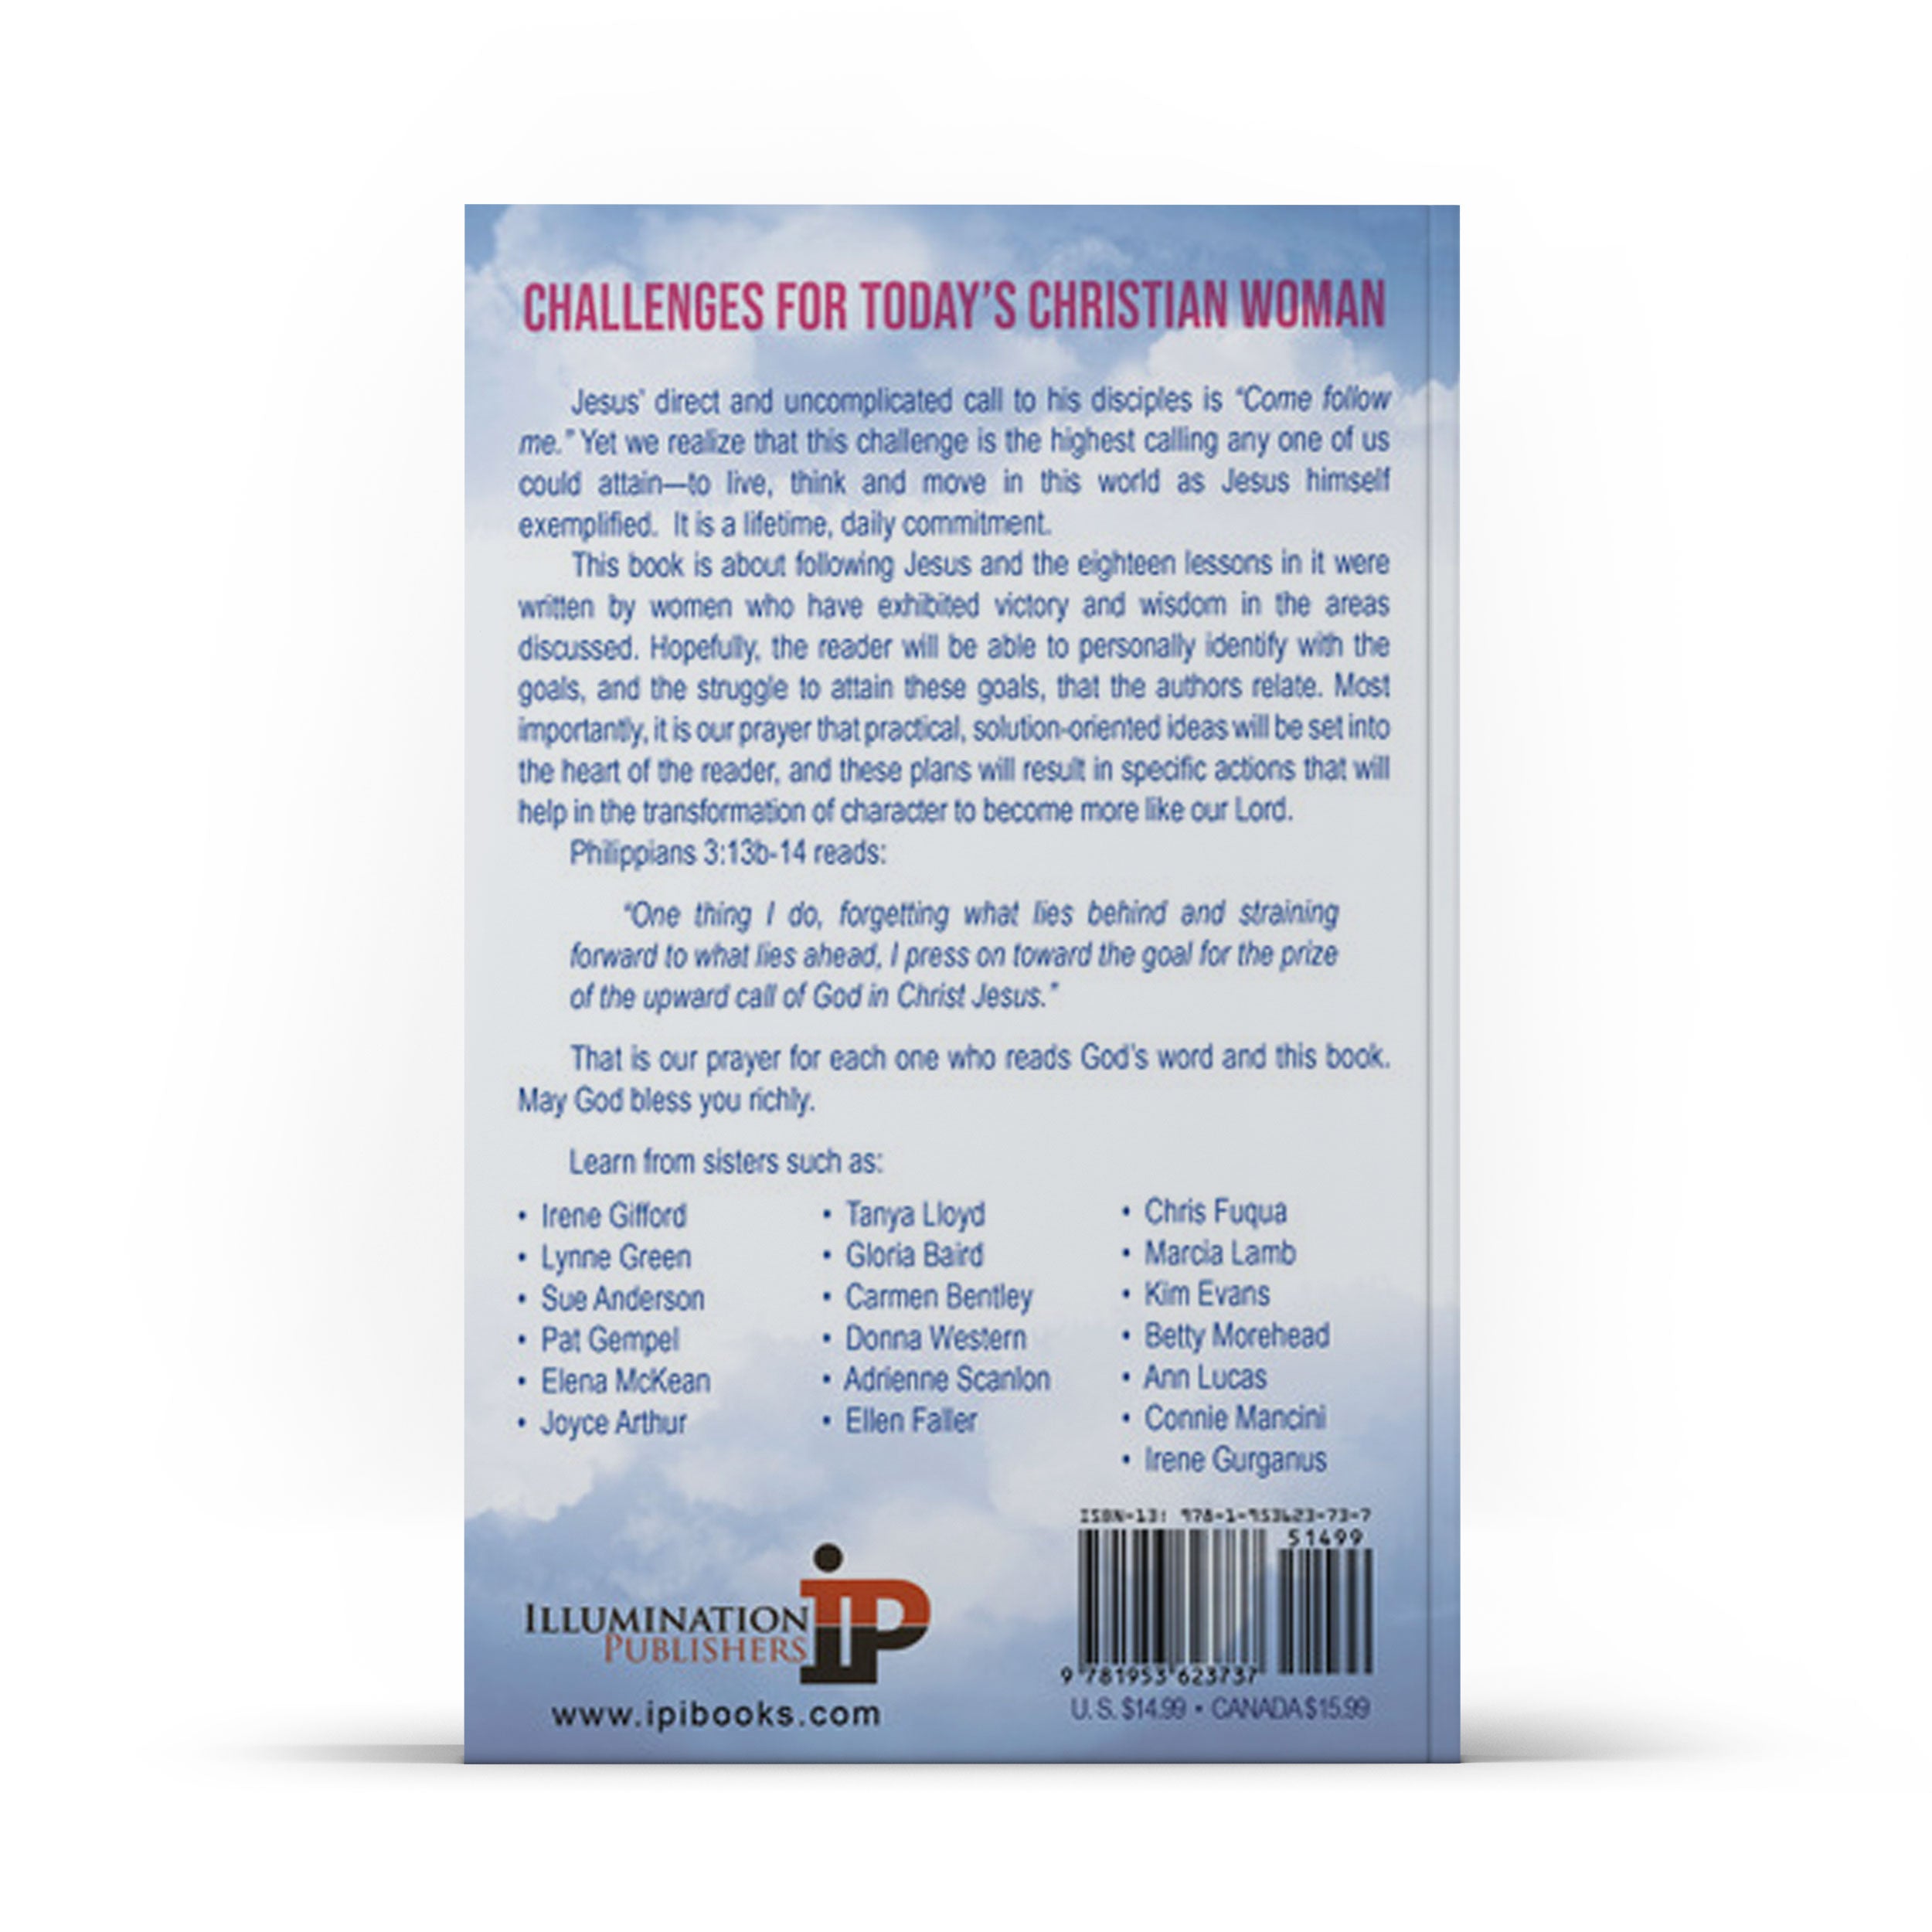 The Upward Call, Edited by Pat Gempel - Illumination Publishers